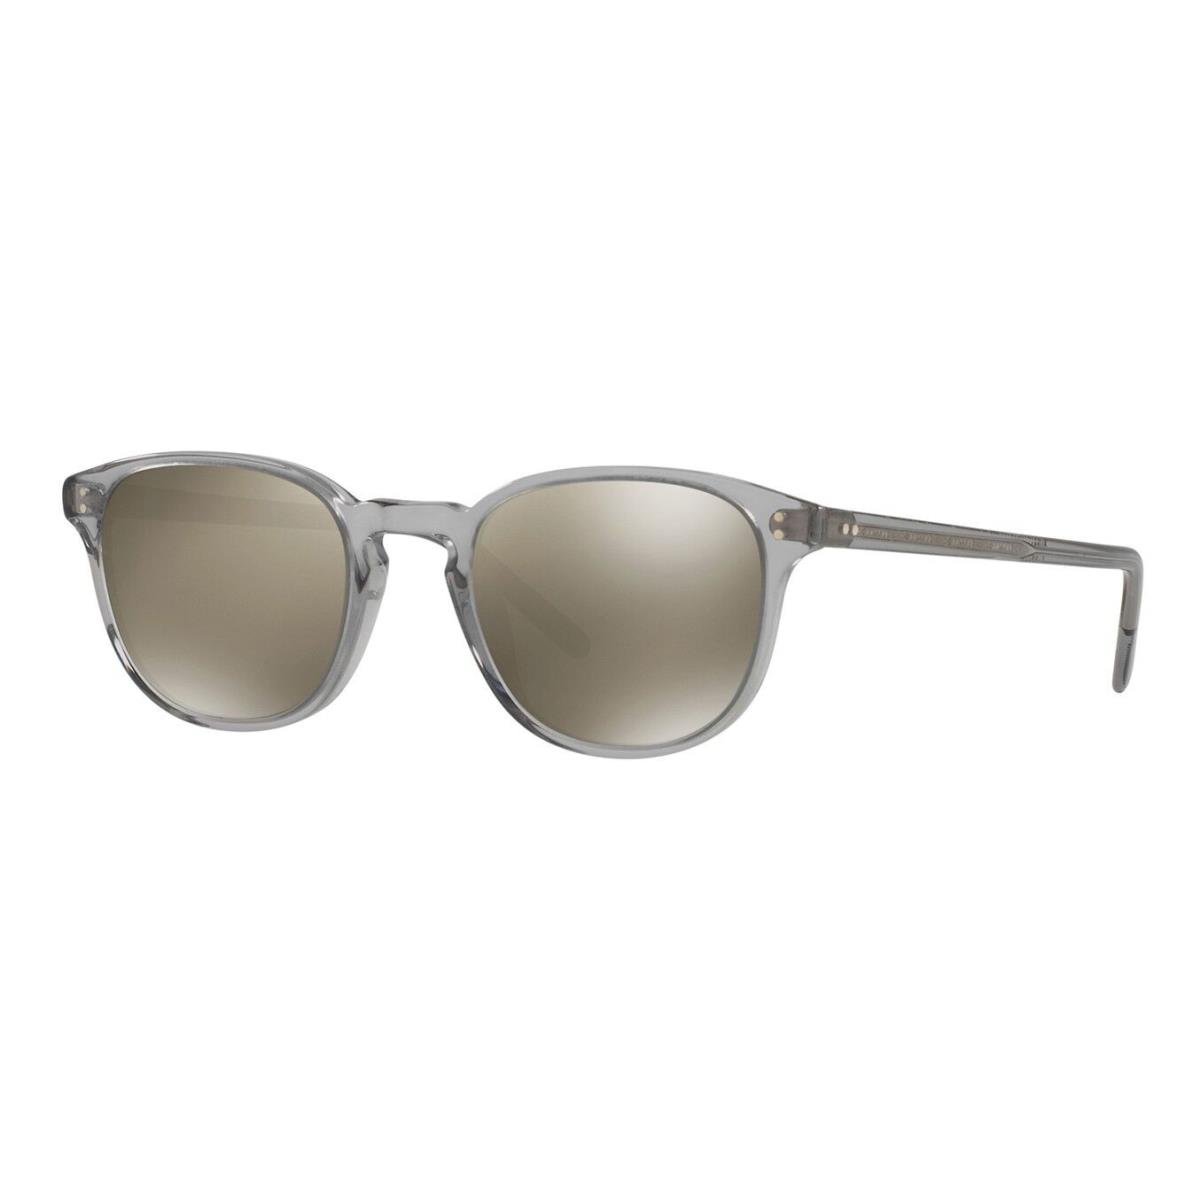 Oliver Peoples Fairmont OV 5219S Grey Goldtone Mirrored 1132/39 Sunglasses - Frame: workman grey brushed silver, Lens: grey goldtone mirror